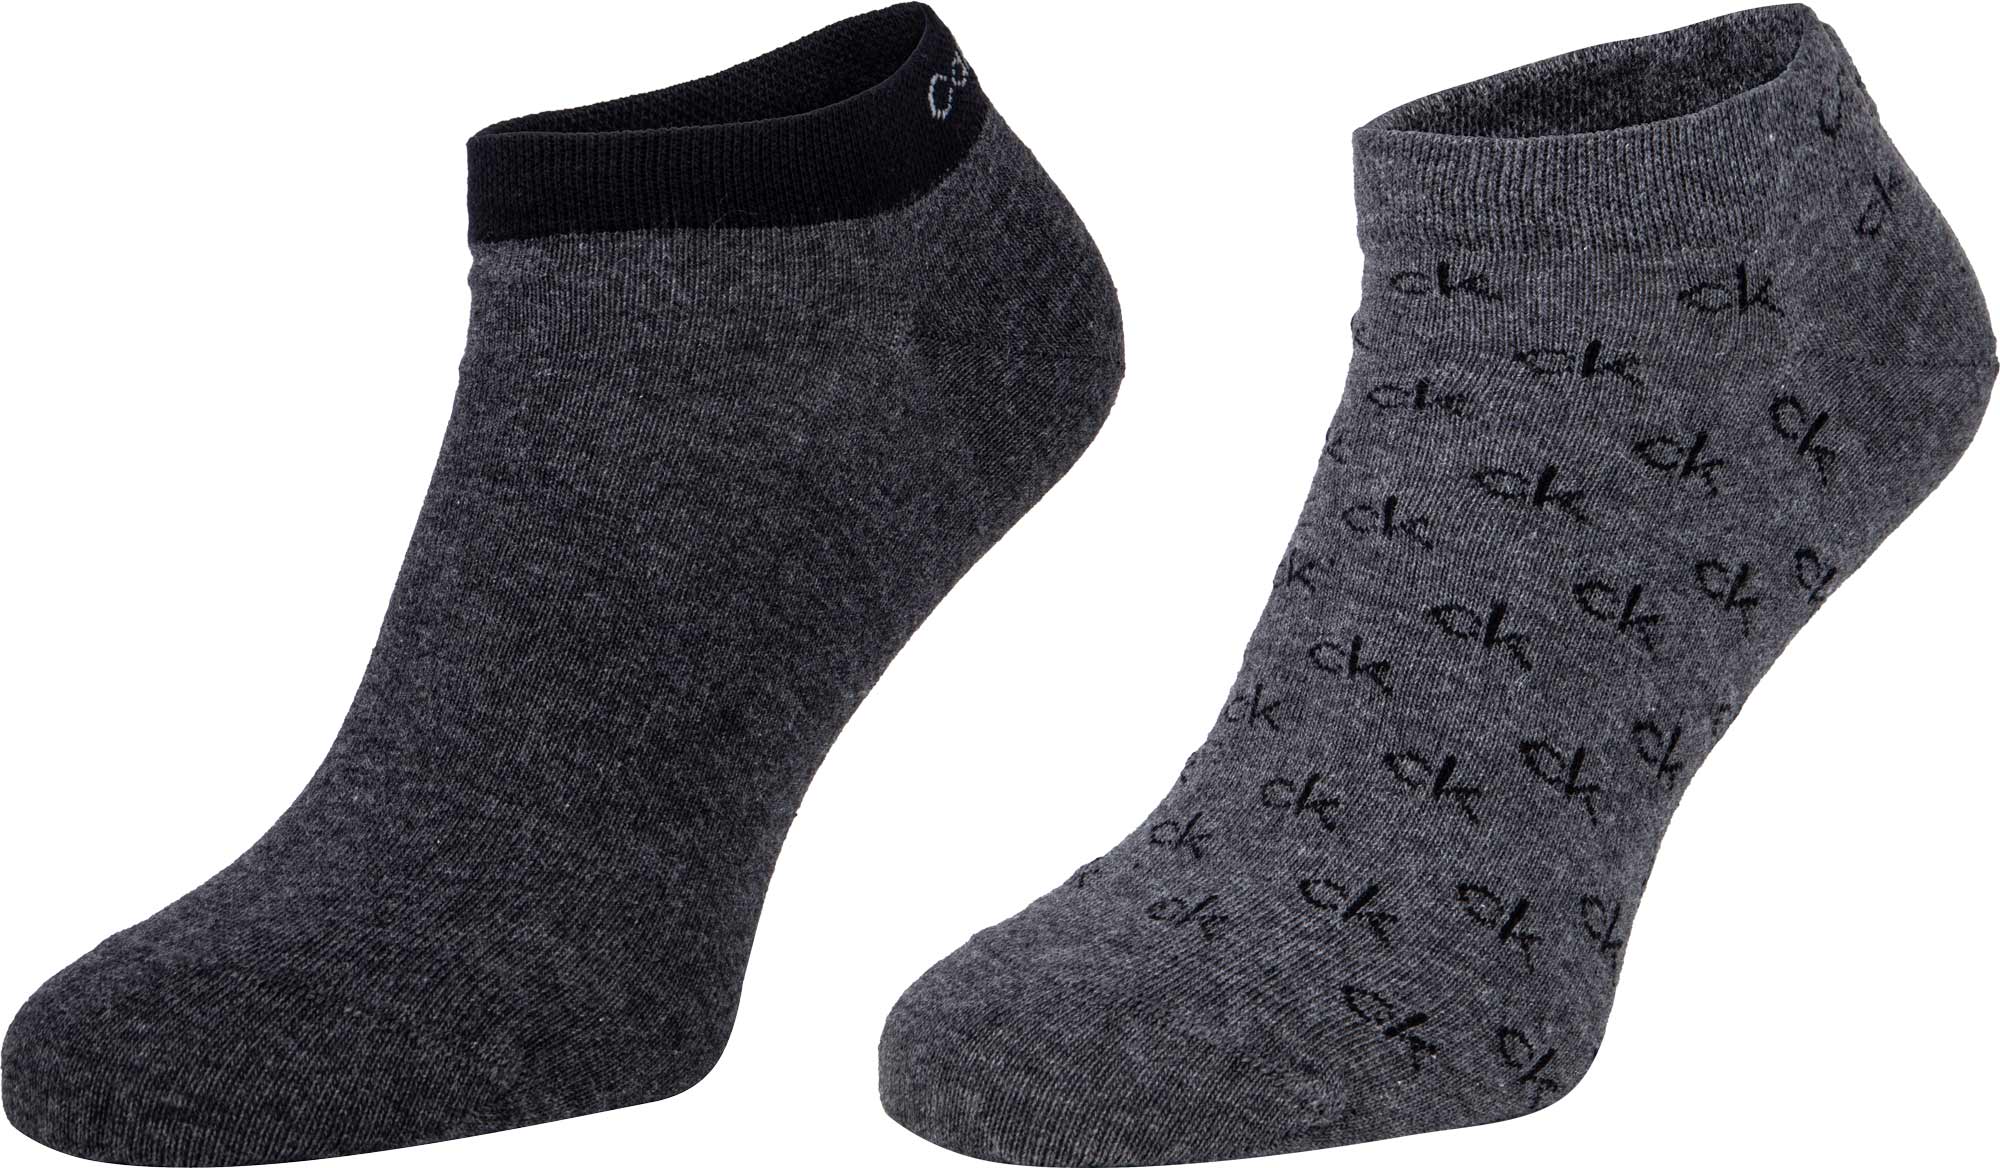 Men’s socks